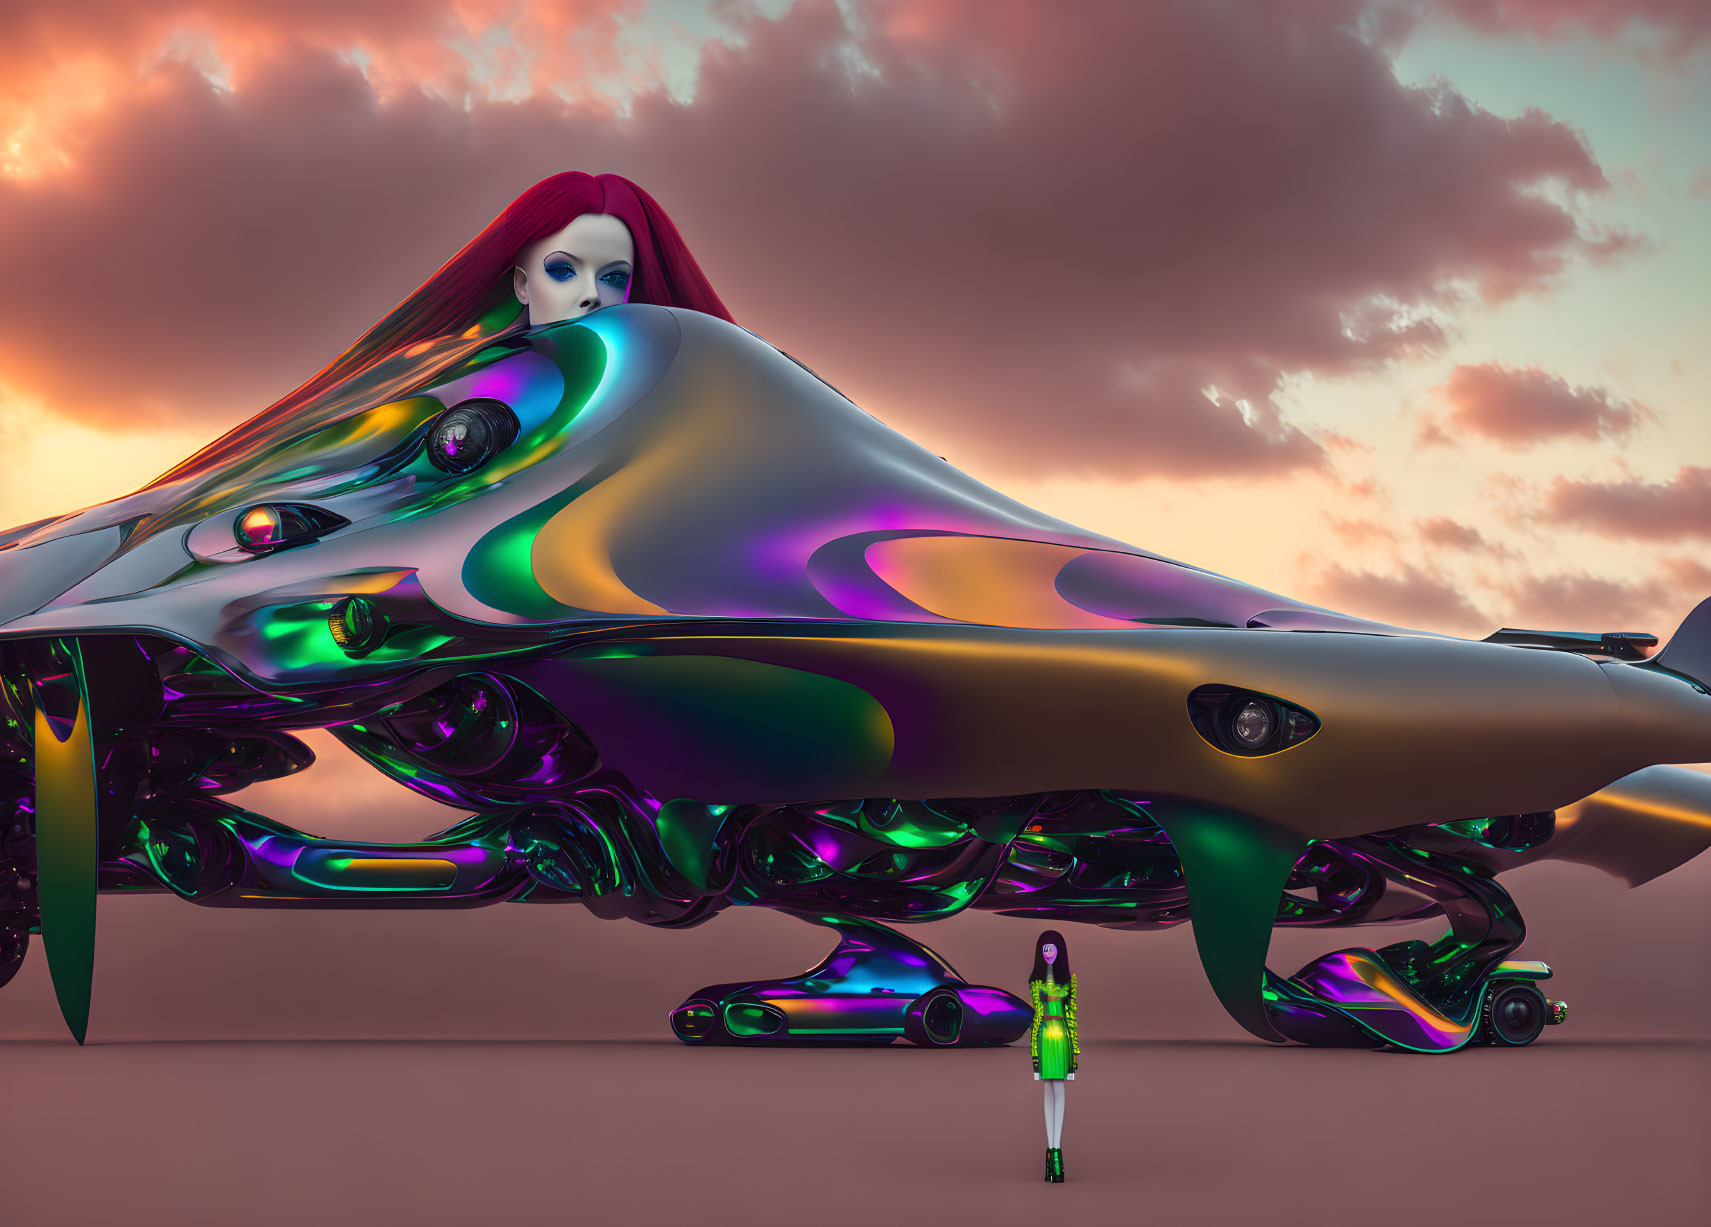 Futuristic scene with human figures beneath large iridescent shape